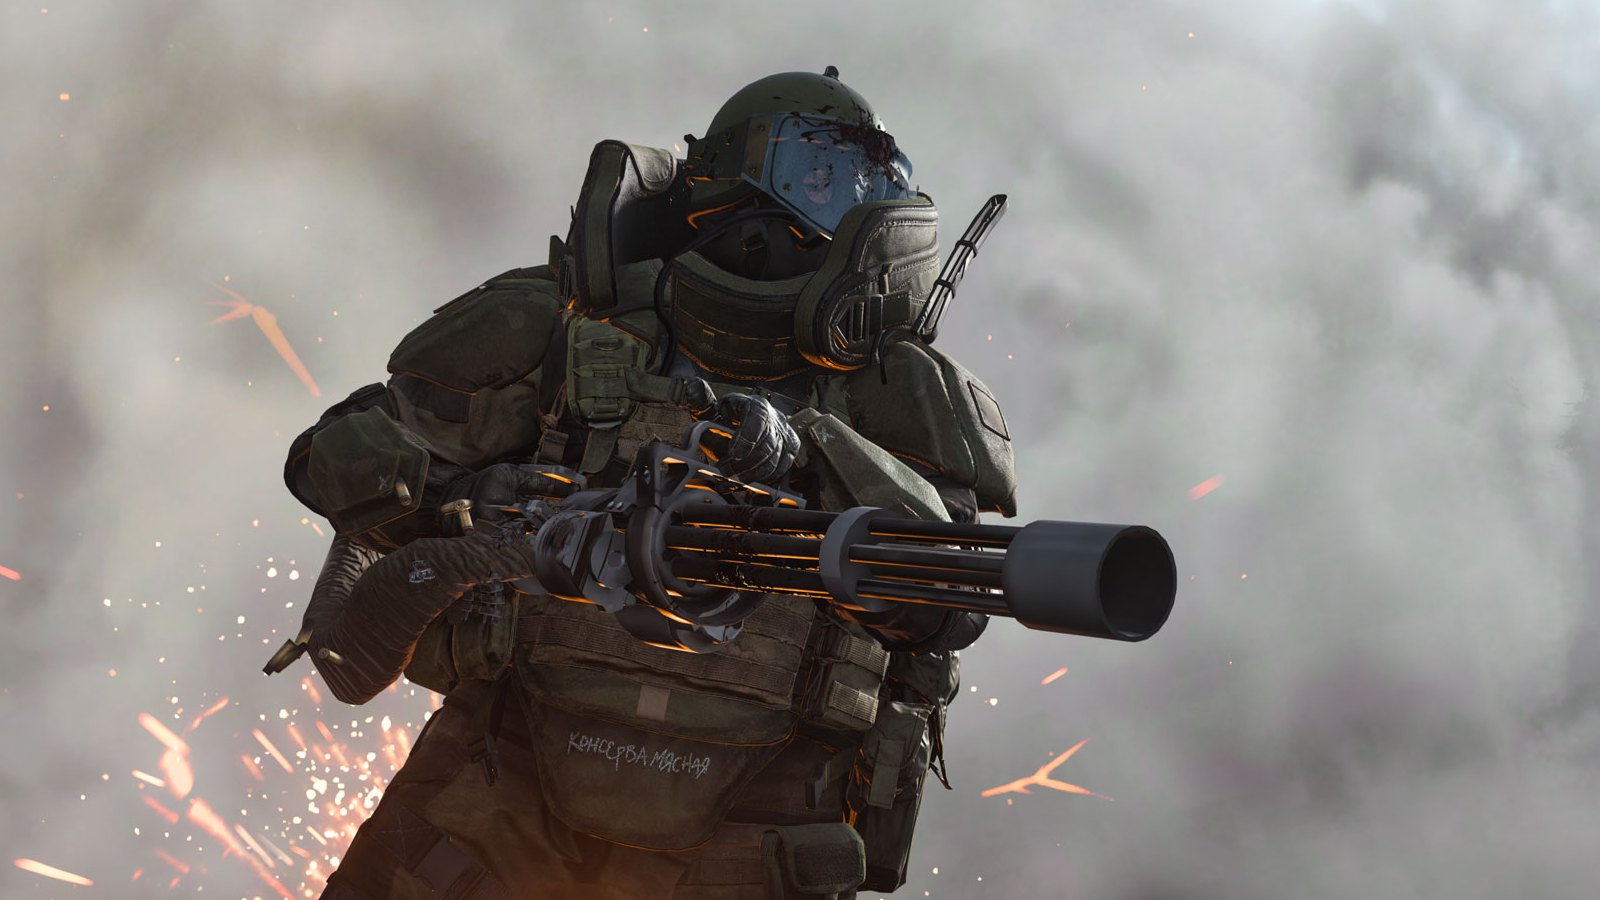 Трейлер Call of Duty: Modern Warfare, посвящённый «Спецоперациям» — масштабному кооперативу для четырёх игроков